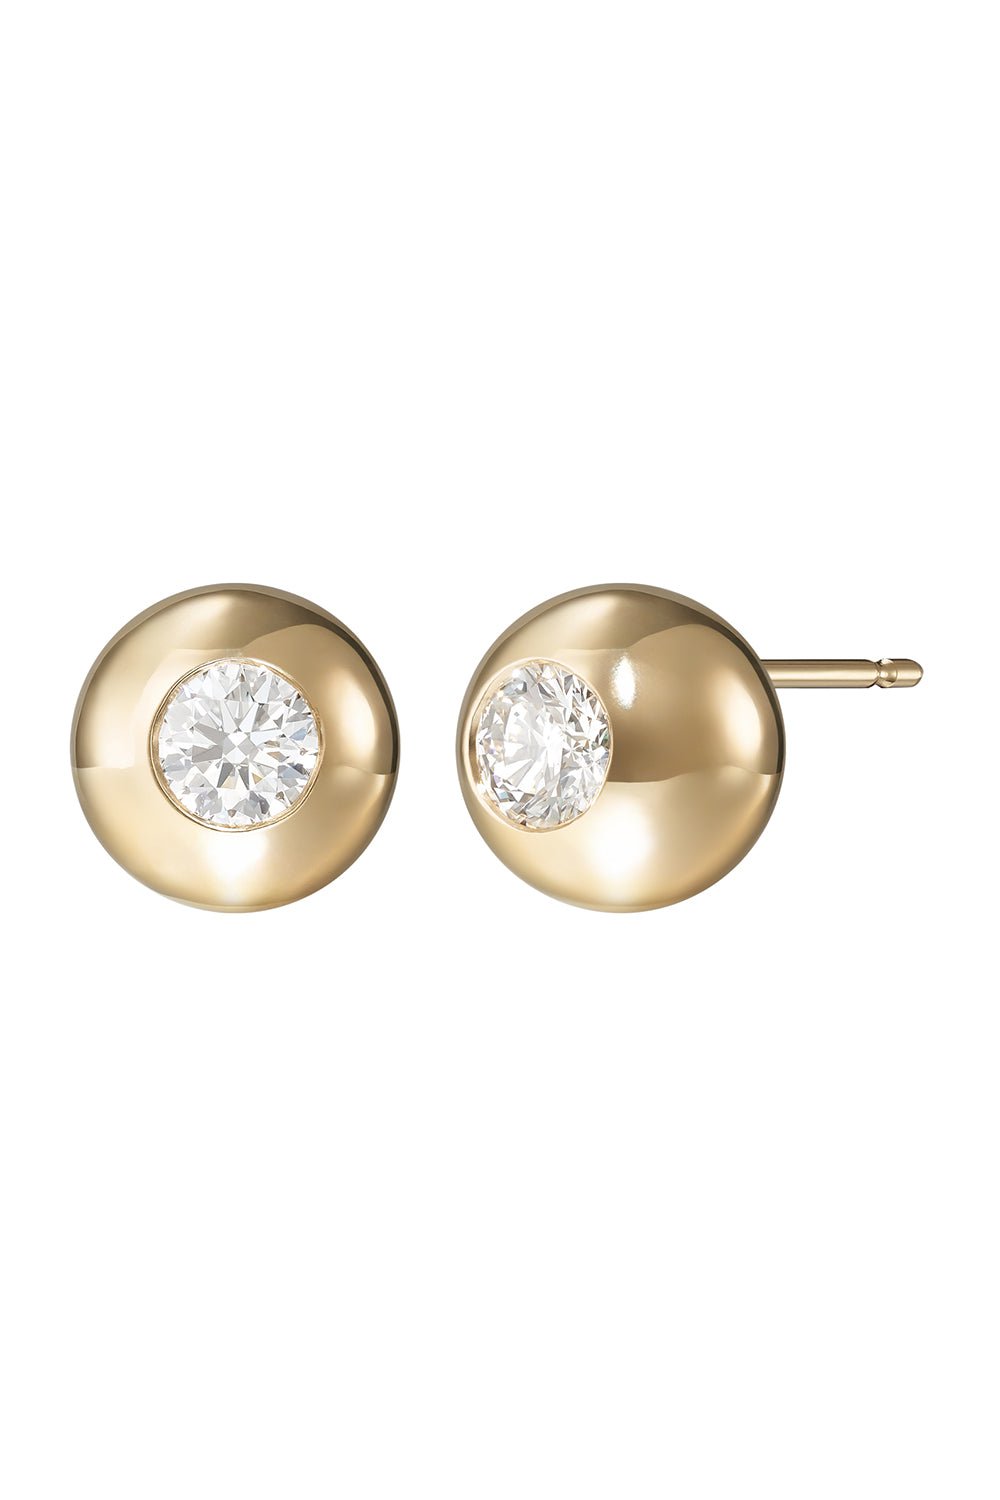 MELISSA KAYE-Large Audrey Stud Earrings-YELLOW GOLD